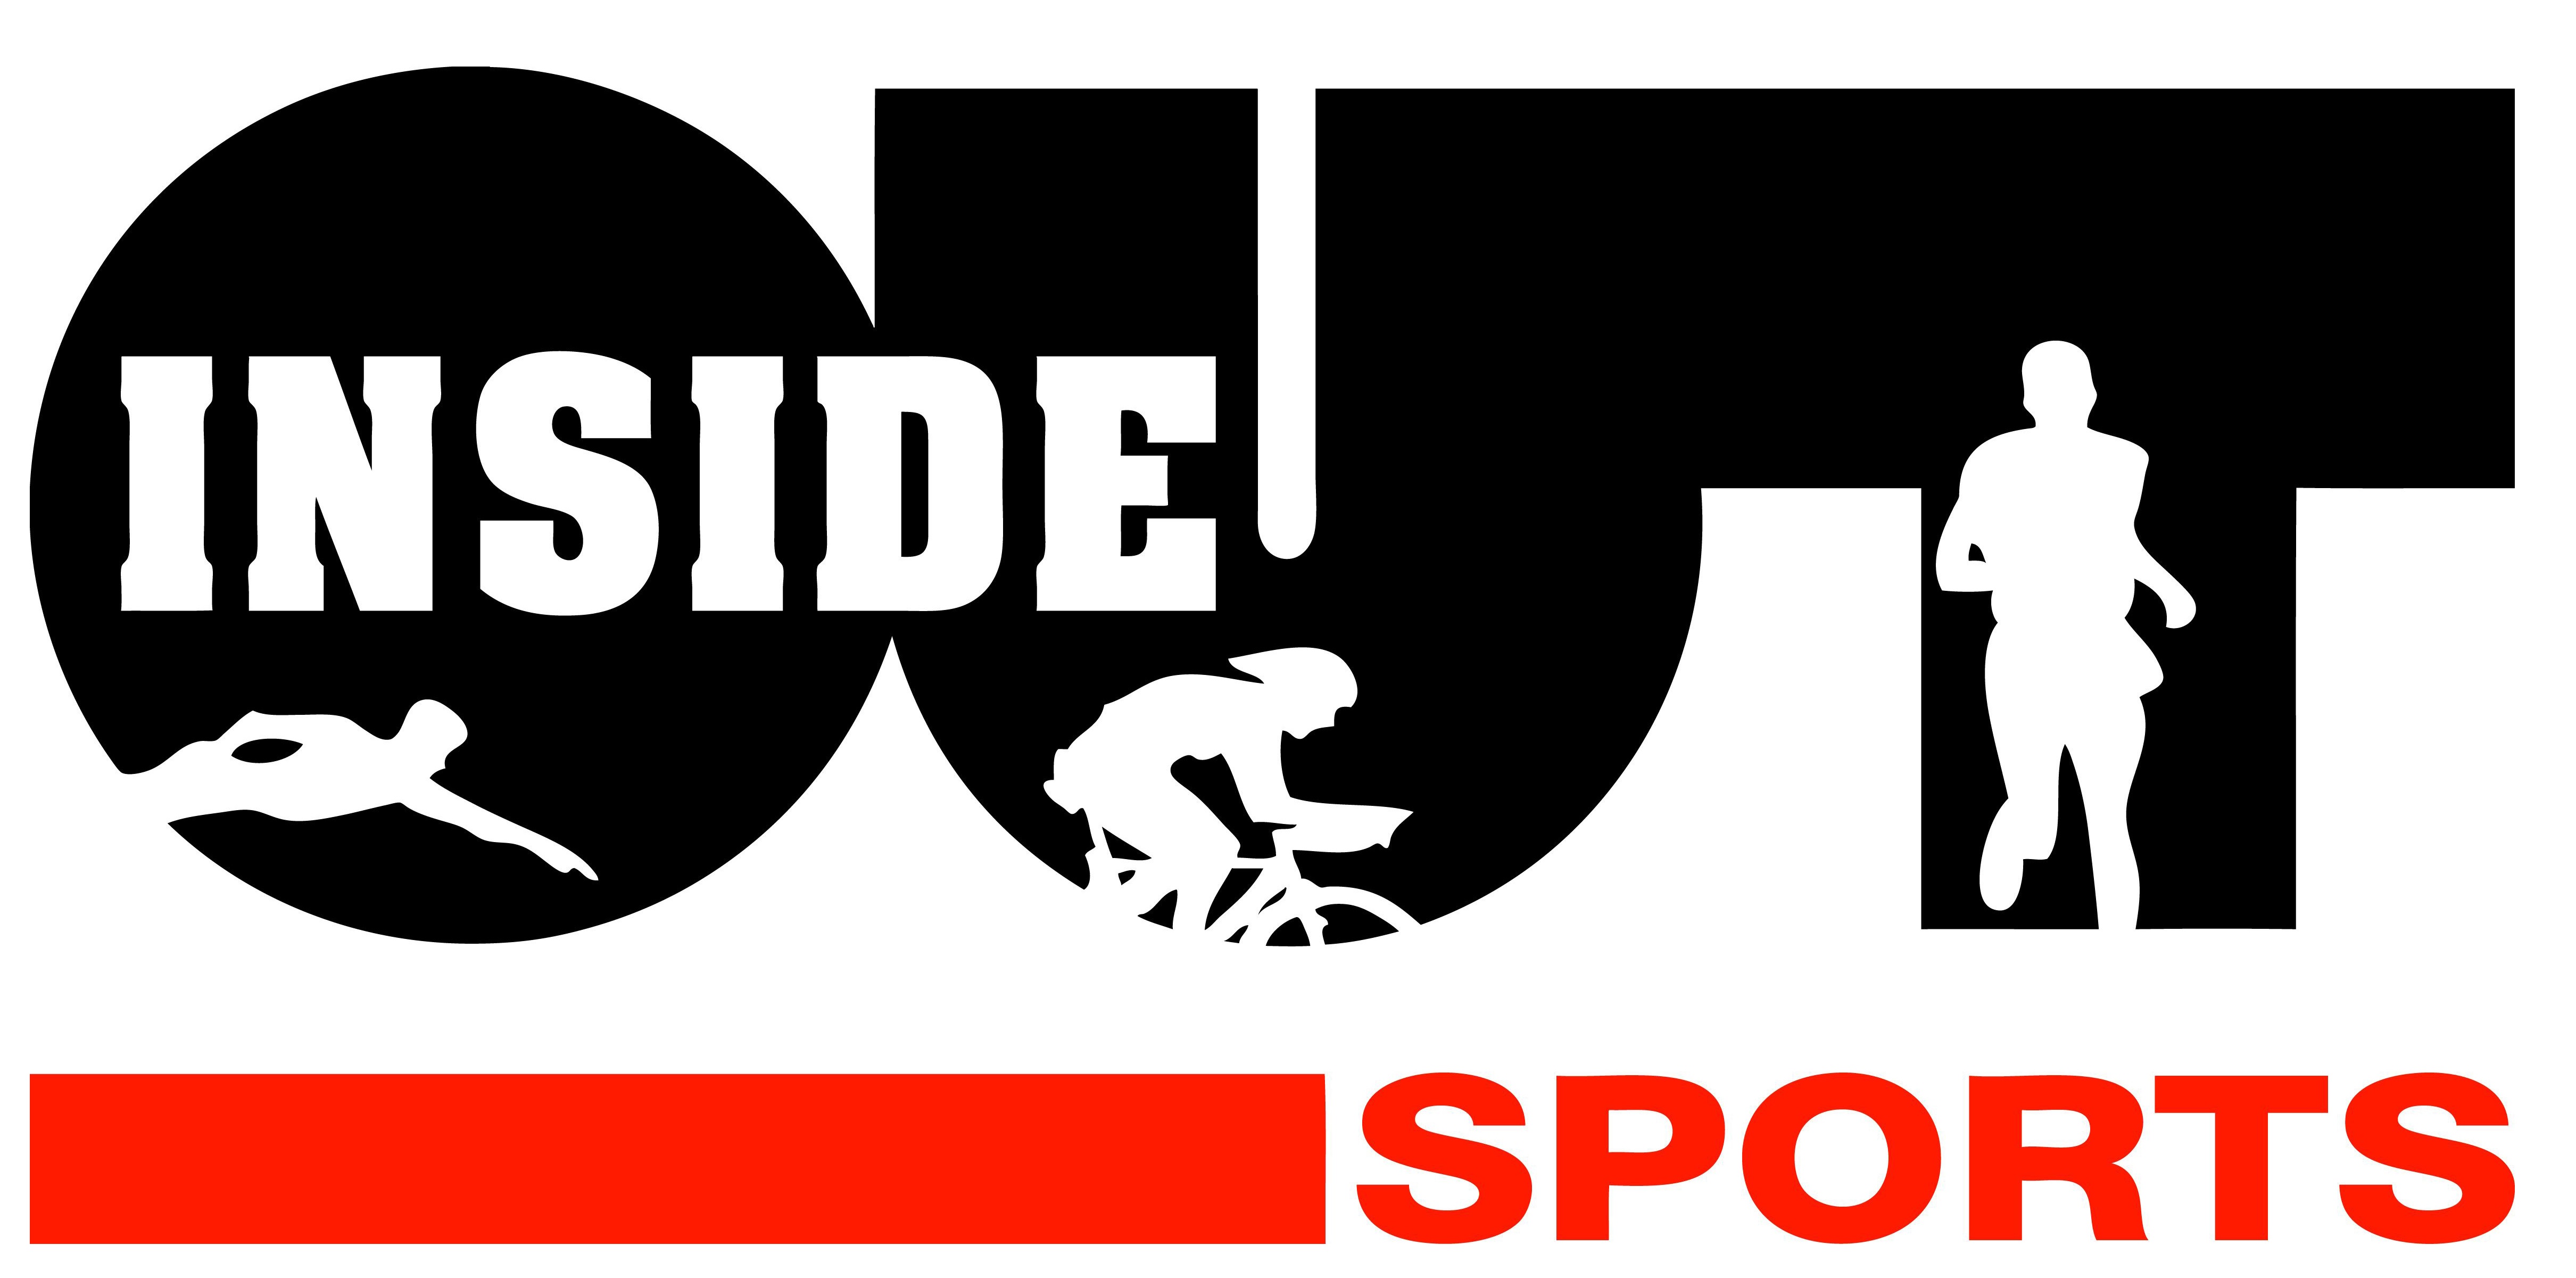 Sponsor Inside-Out Sports